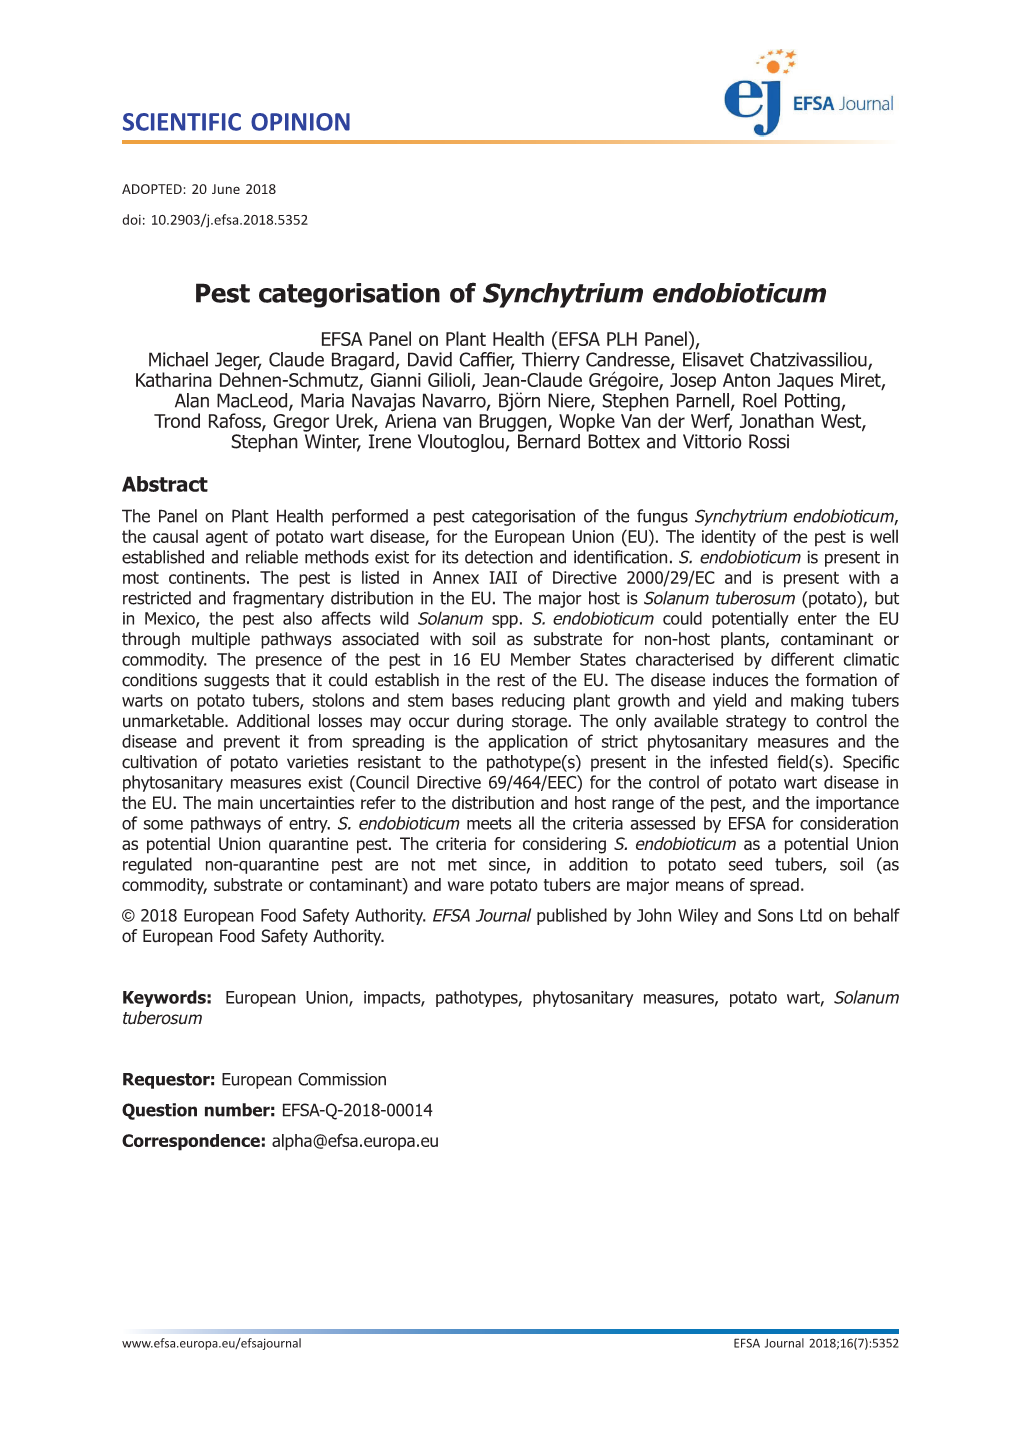 Pest Categorisation of Synchytrium Endobioticum